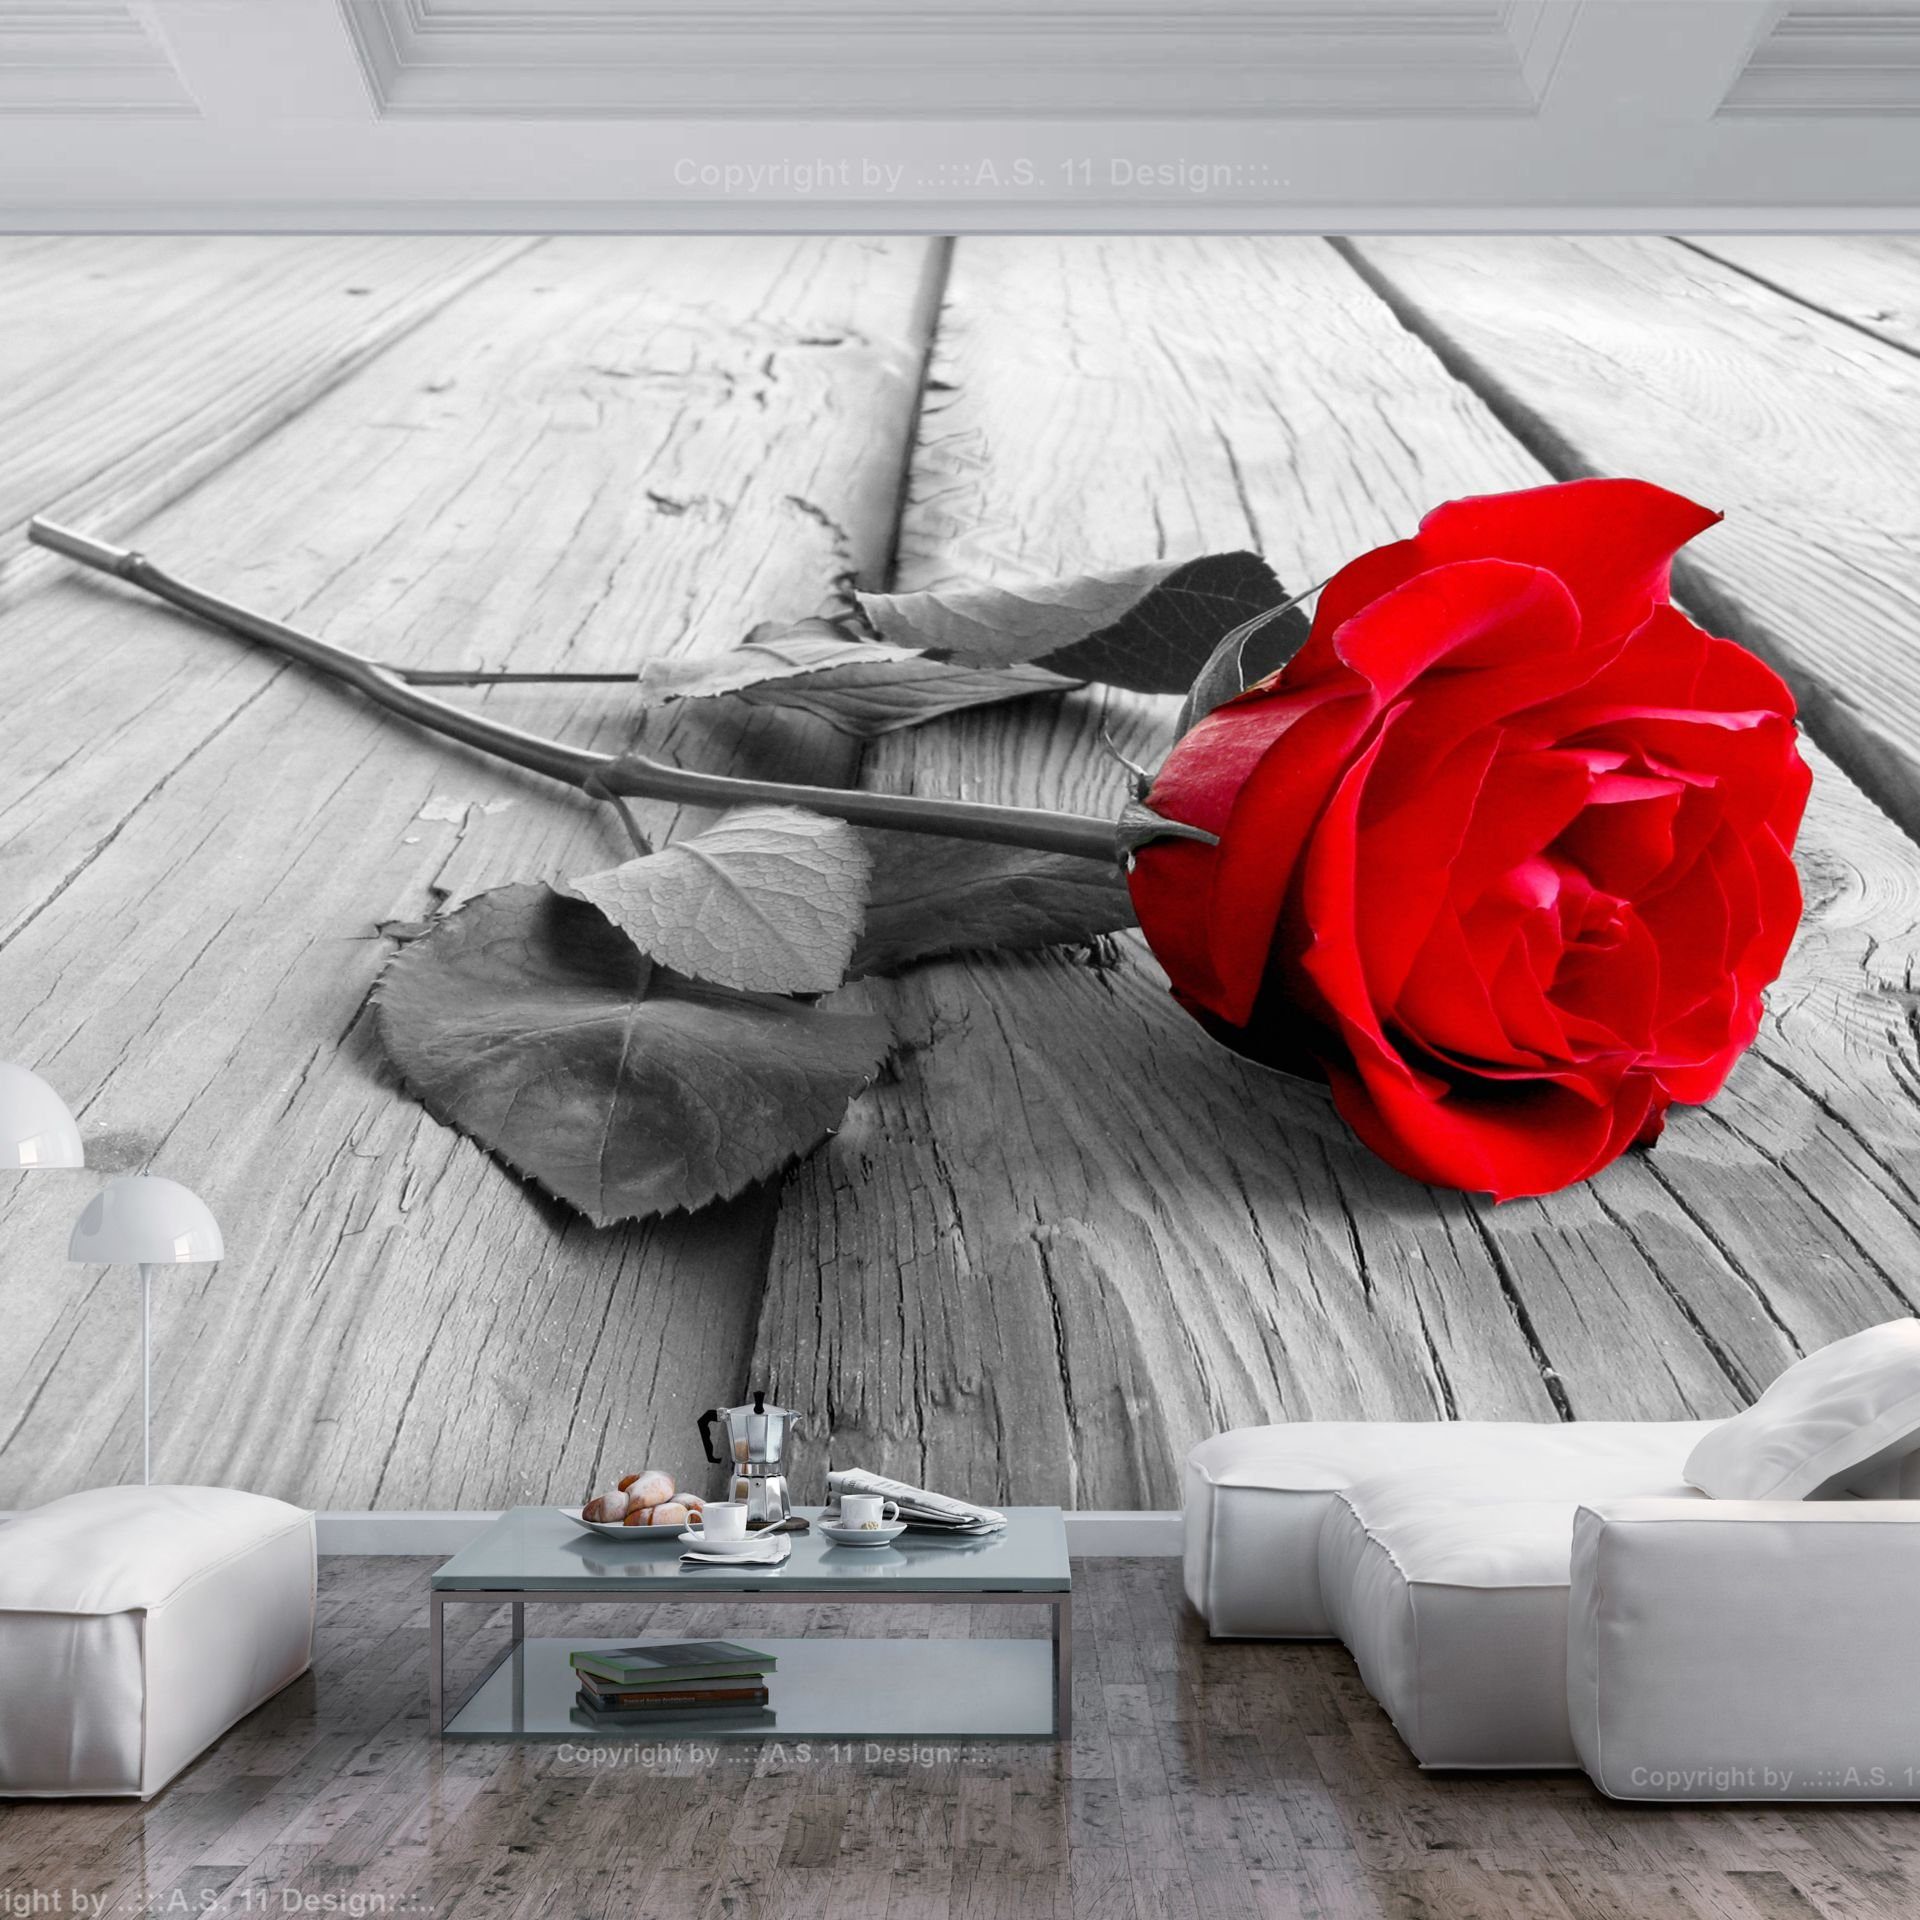 KUNSTLOFT Vliestapete Abandoned Rose 0.98x0.7 m, halb-matt, matt, lichtbeständige Design Tapete